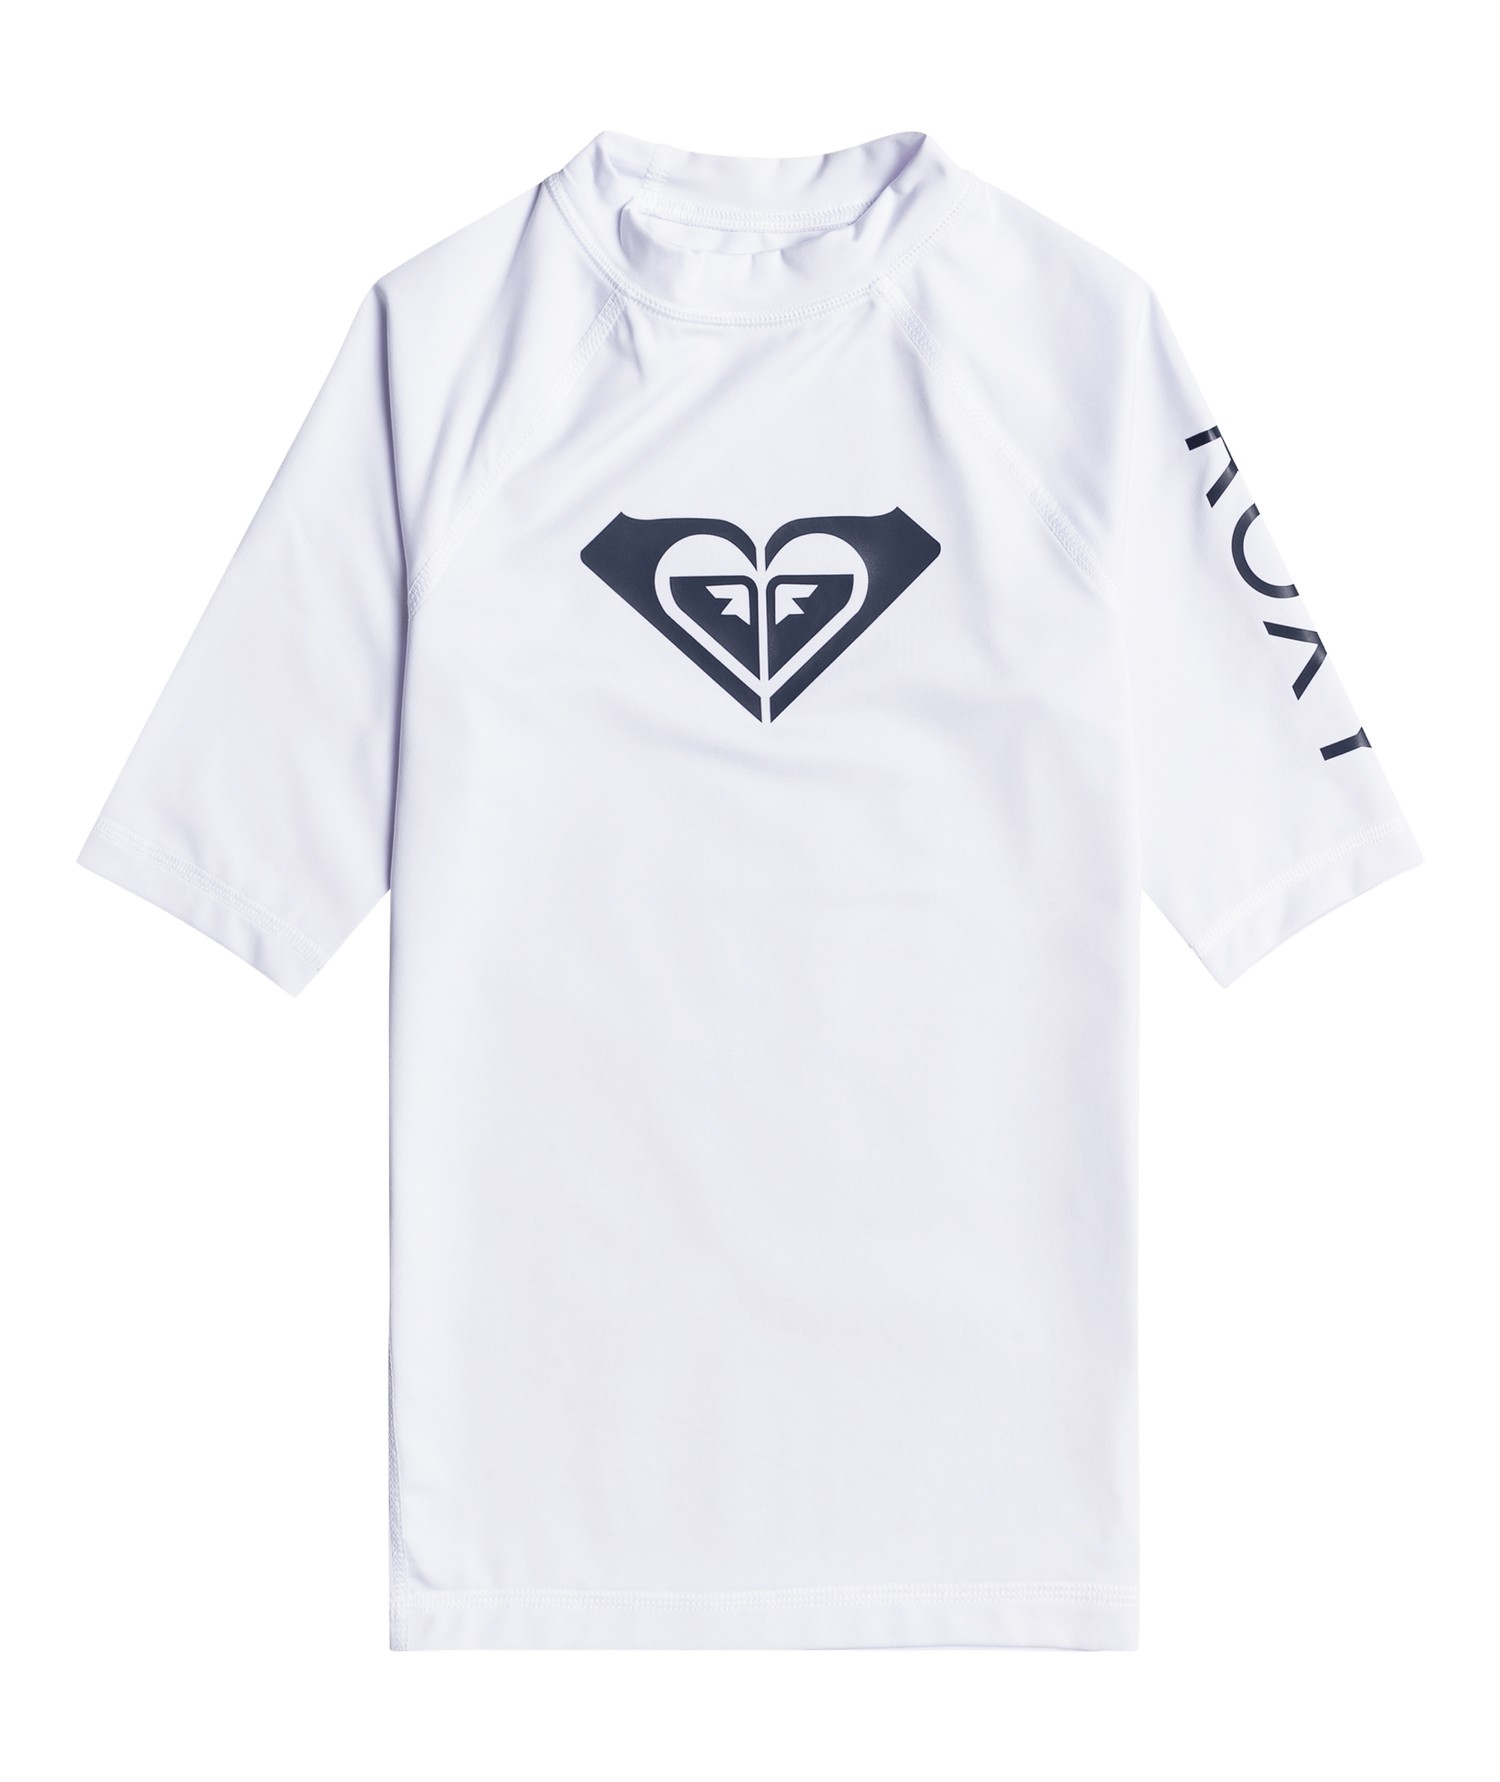 Roxy - UV Rashguard for girls - Whole Hearted - Short sleeve - Bright White